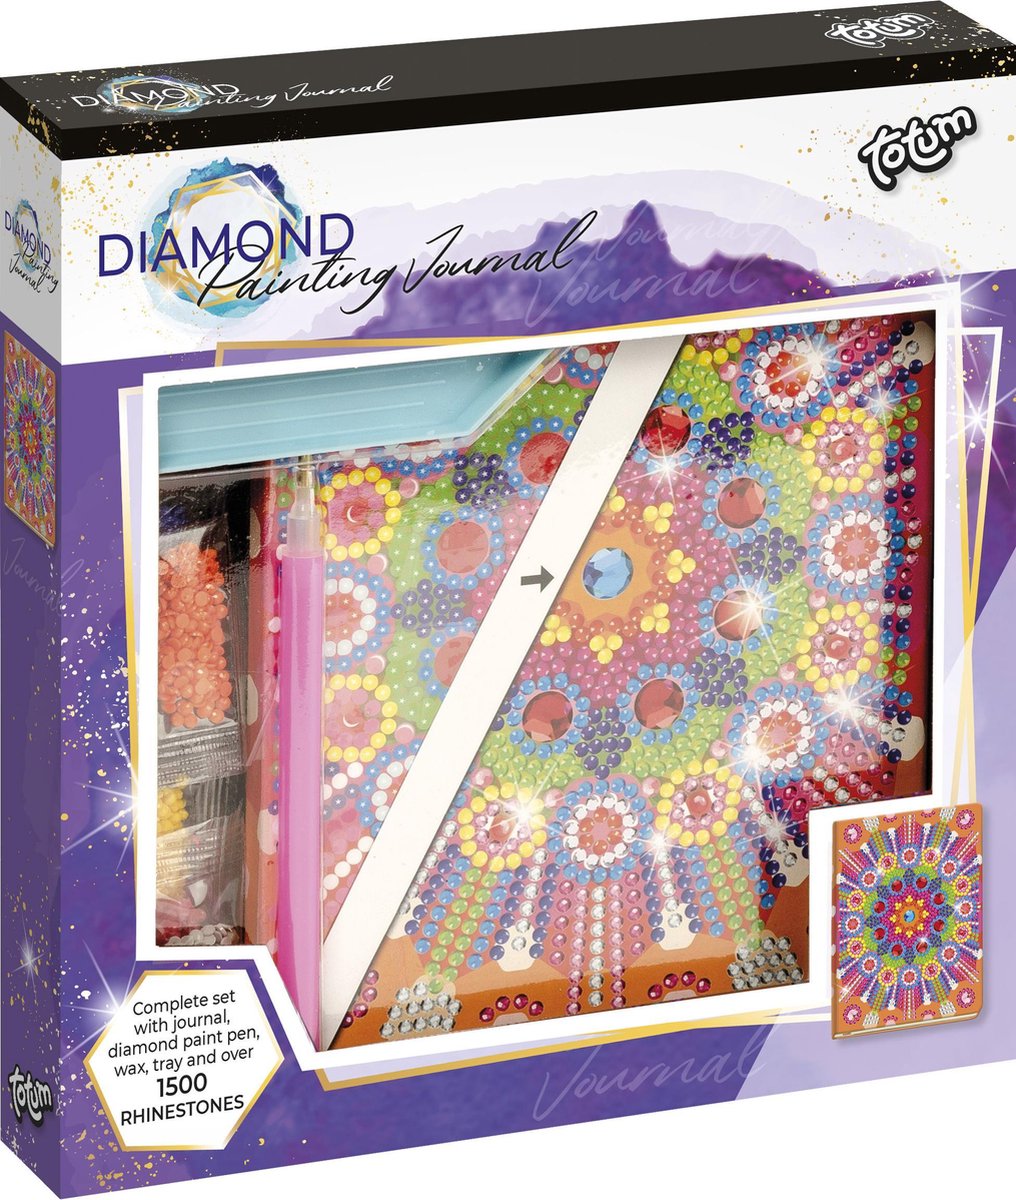 Totum Diamond Painting Notitieboek - creatief dagboek knutselpakket met strasssteentjes caleidoscope mandala dessin cadeau tip